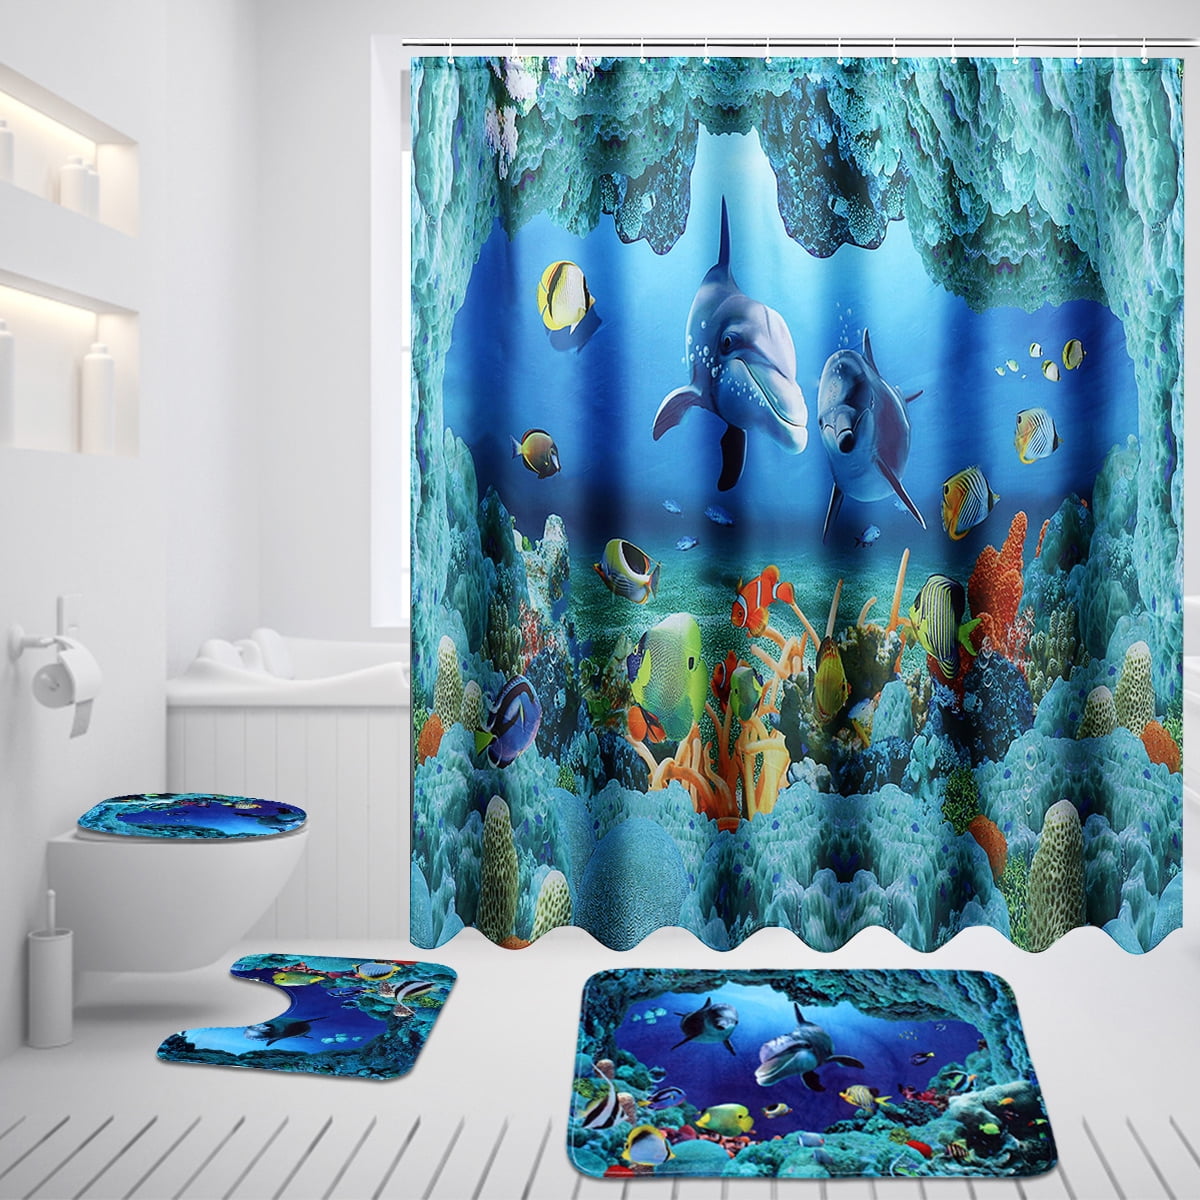 Blue Sea Moon Night Shower Curtain Bath Mat Toilet Cover Rug Bathroom Decor Set 